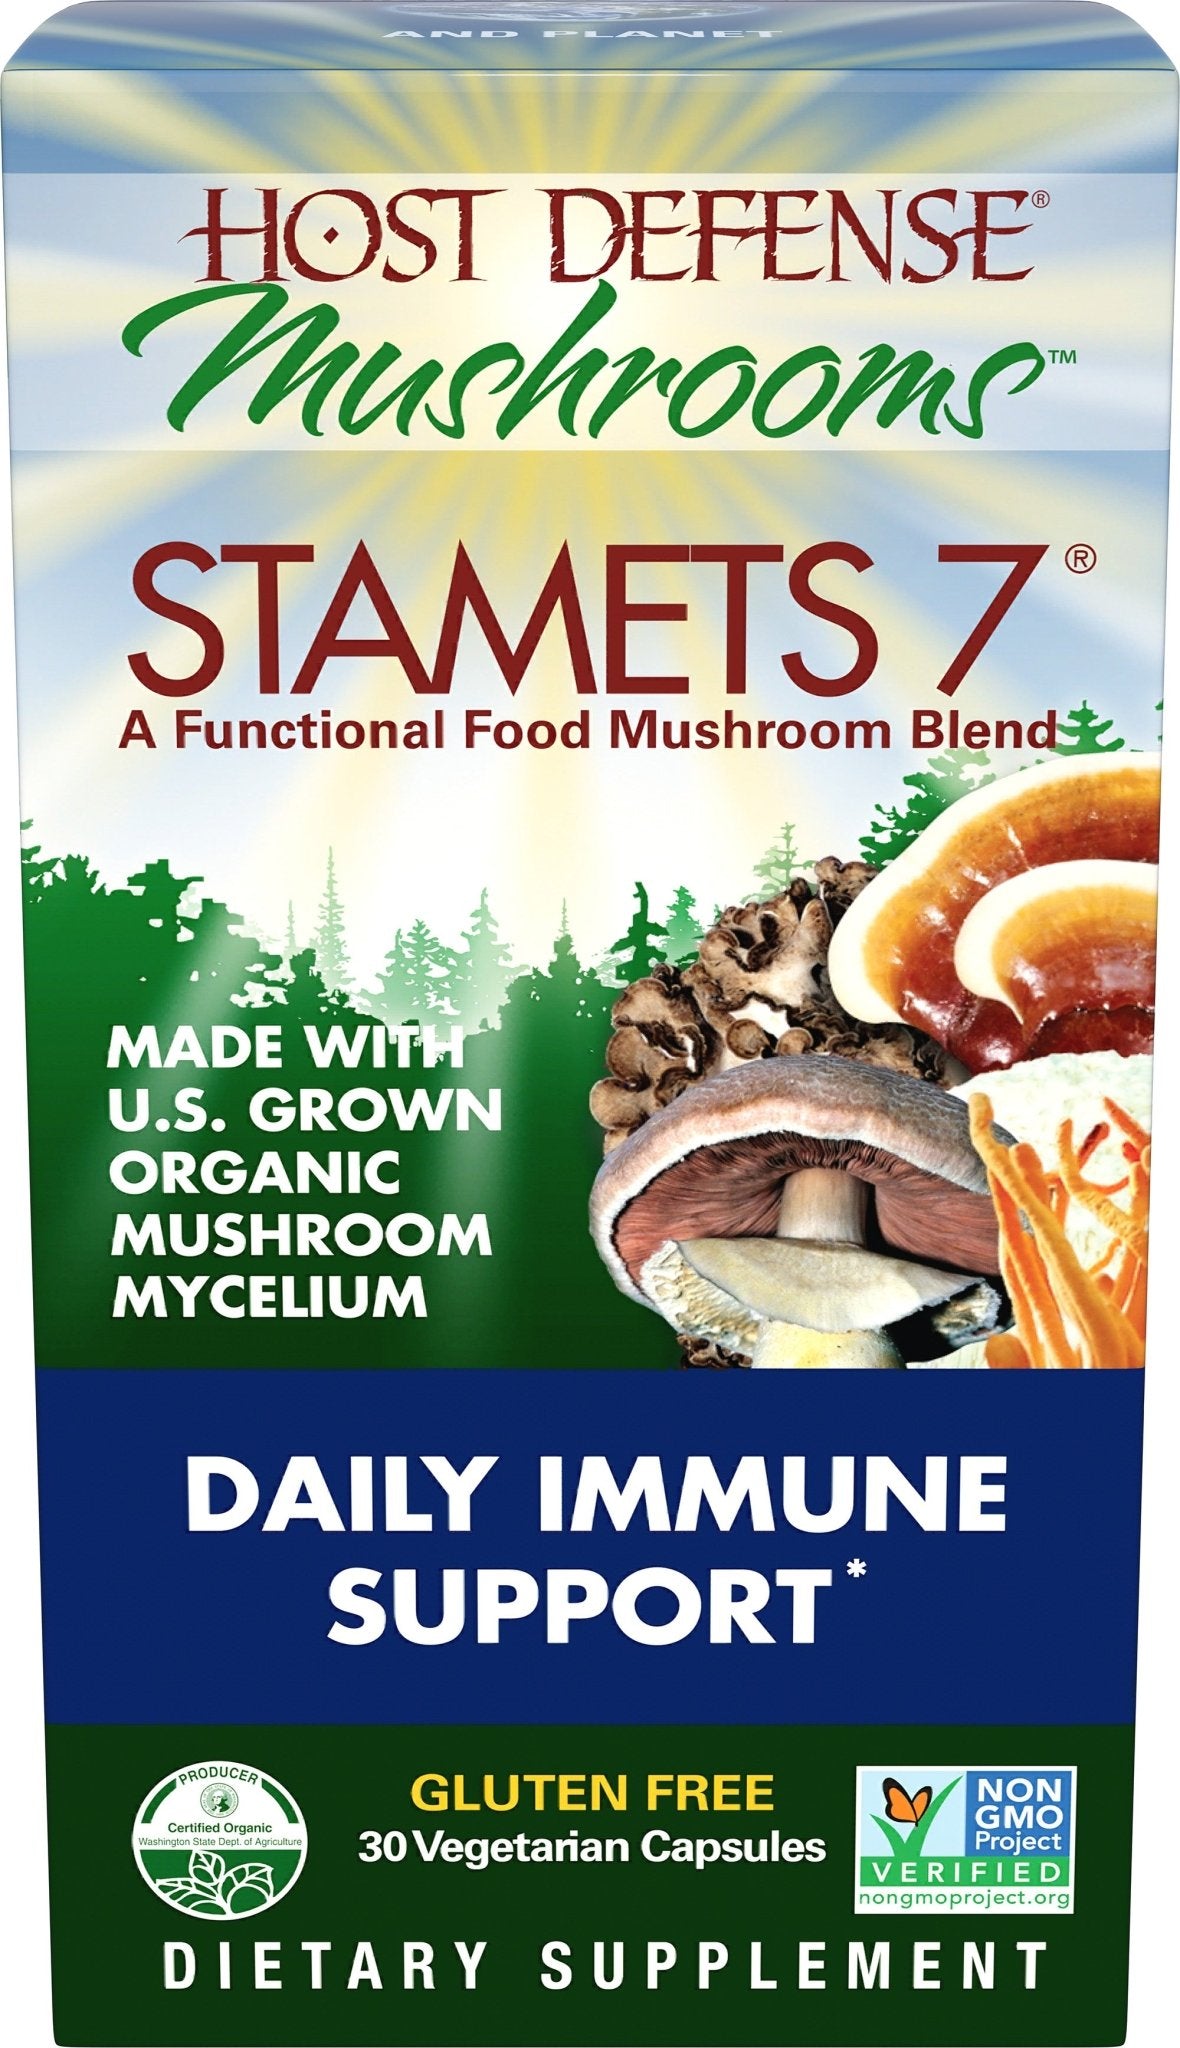 Stamets 7® Capsules - Trichome Seattle - Host Defense - Fungi